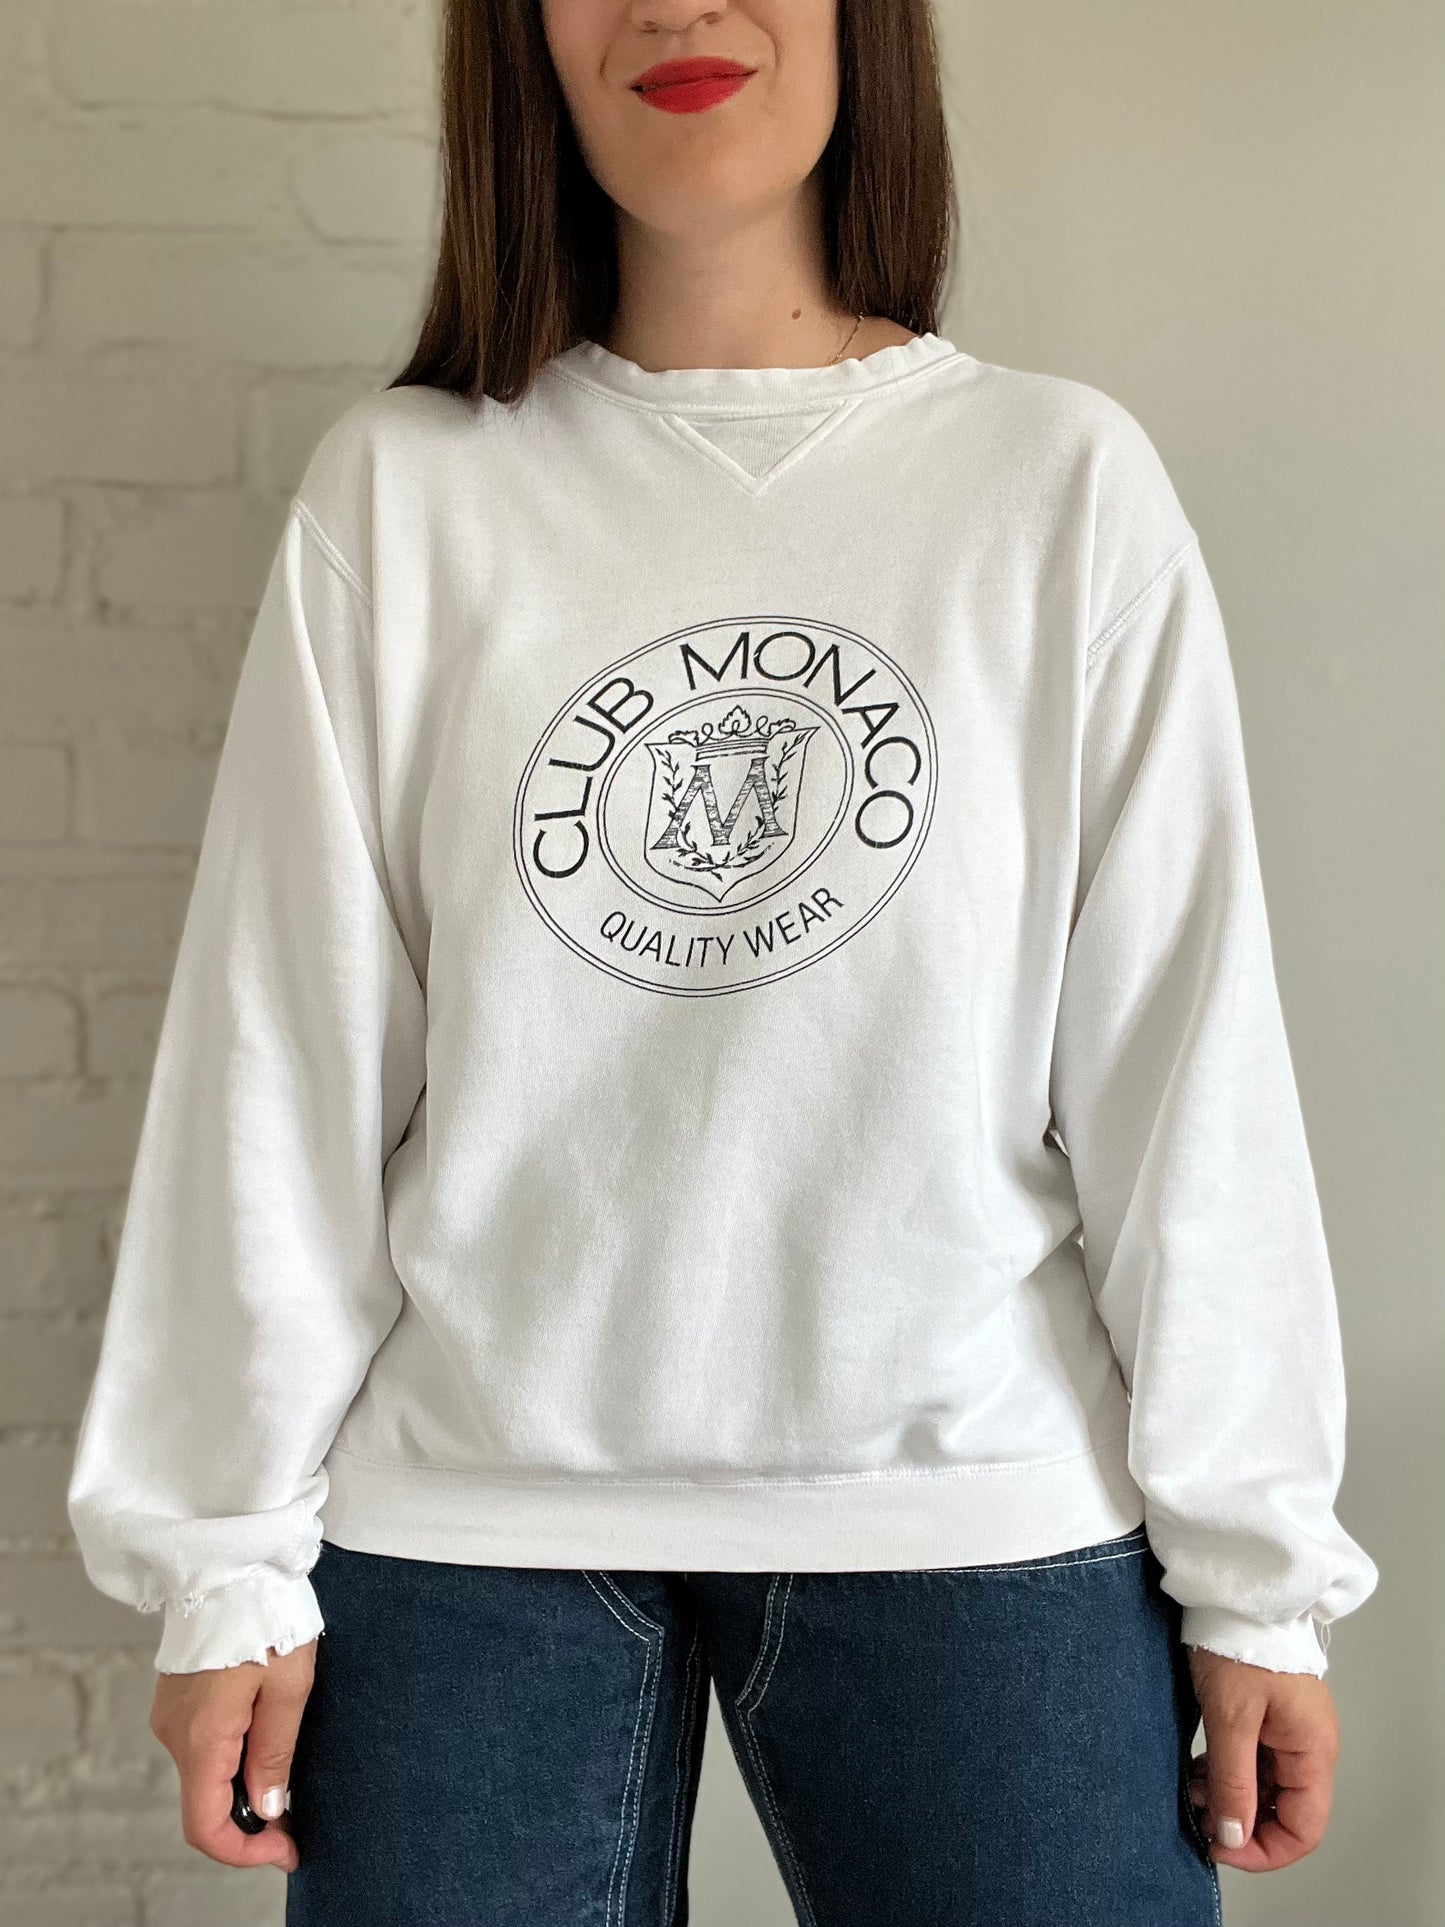 1985 Club Monaco Heritage Crest Sweater - L